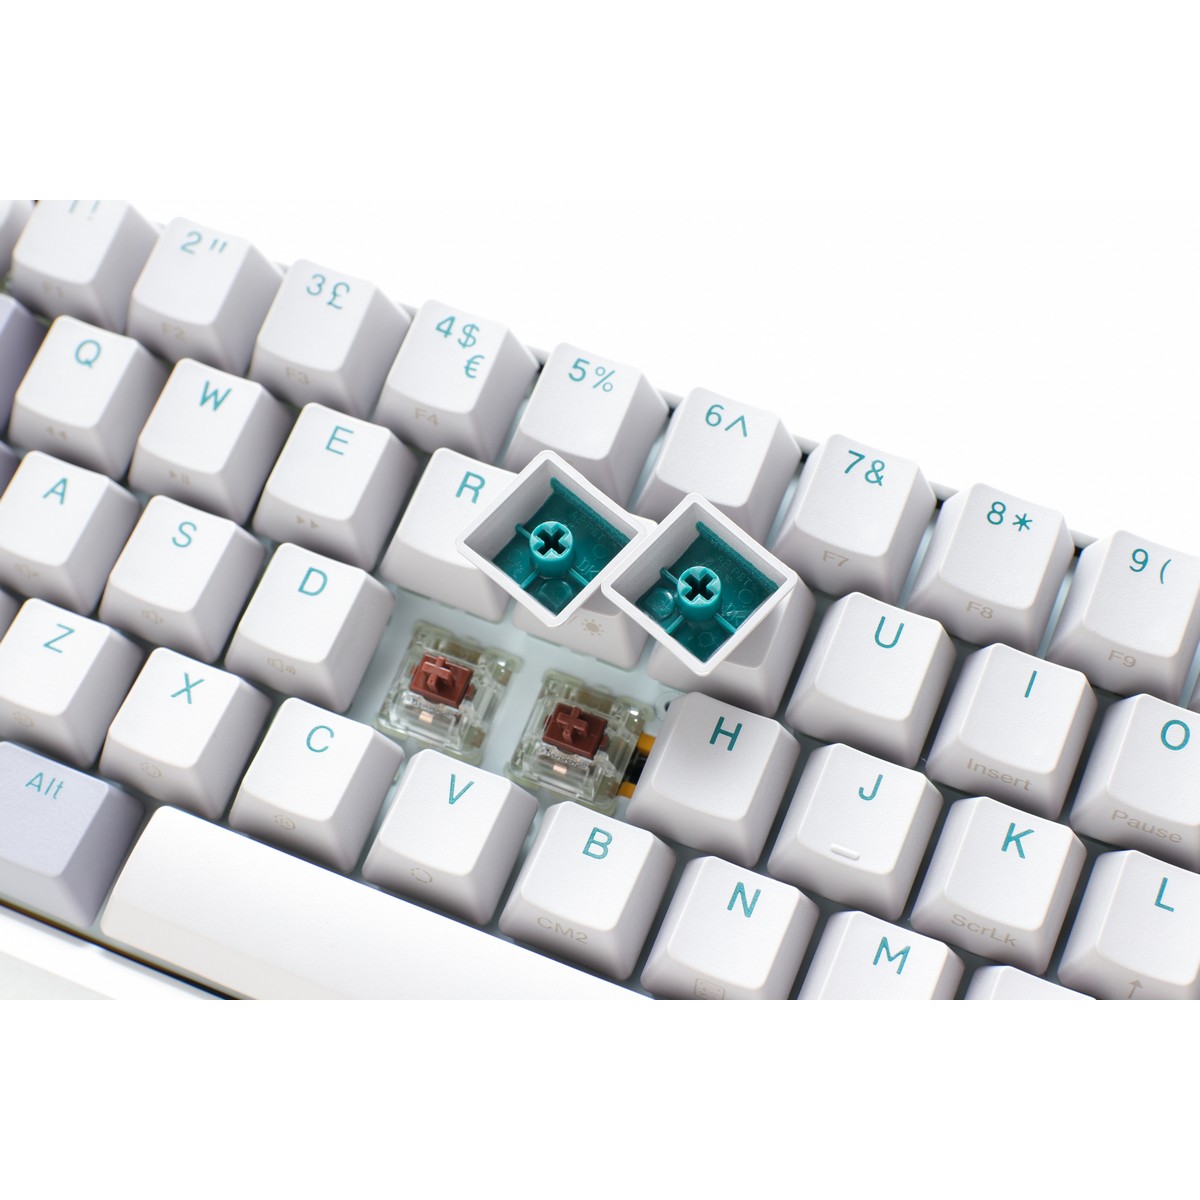 Ducky - Ducky One 3 Mist Mini 60% USB RGB Mechanical Gaming Keyboard Cherry MX Red Switch - UK Layout